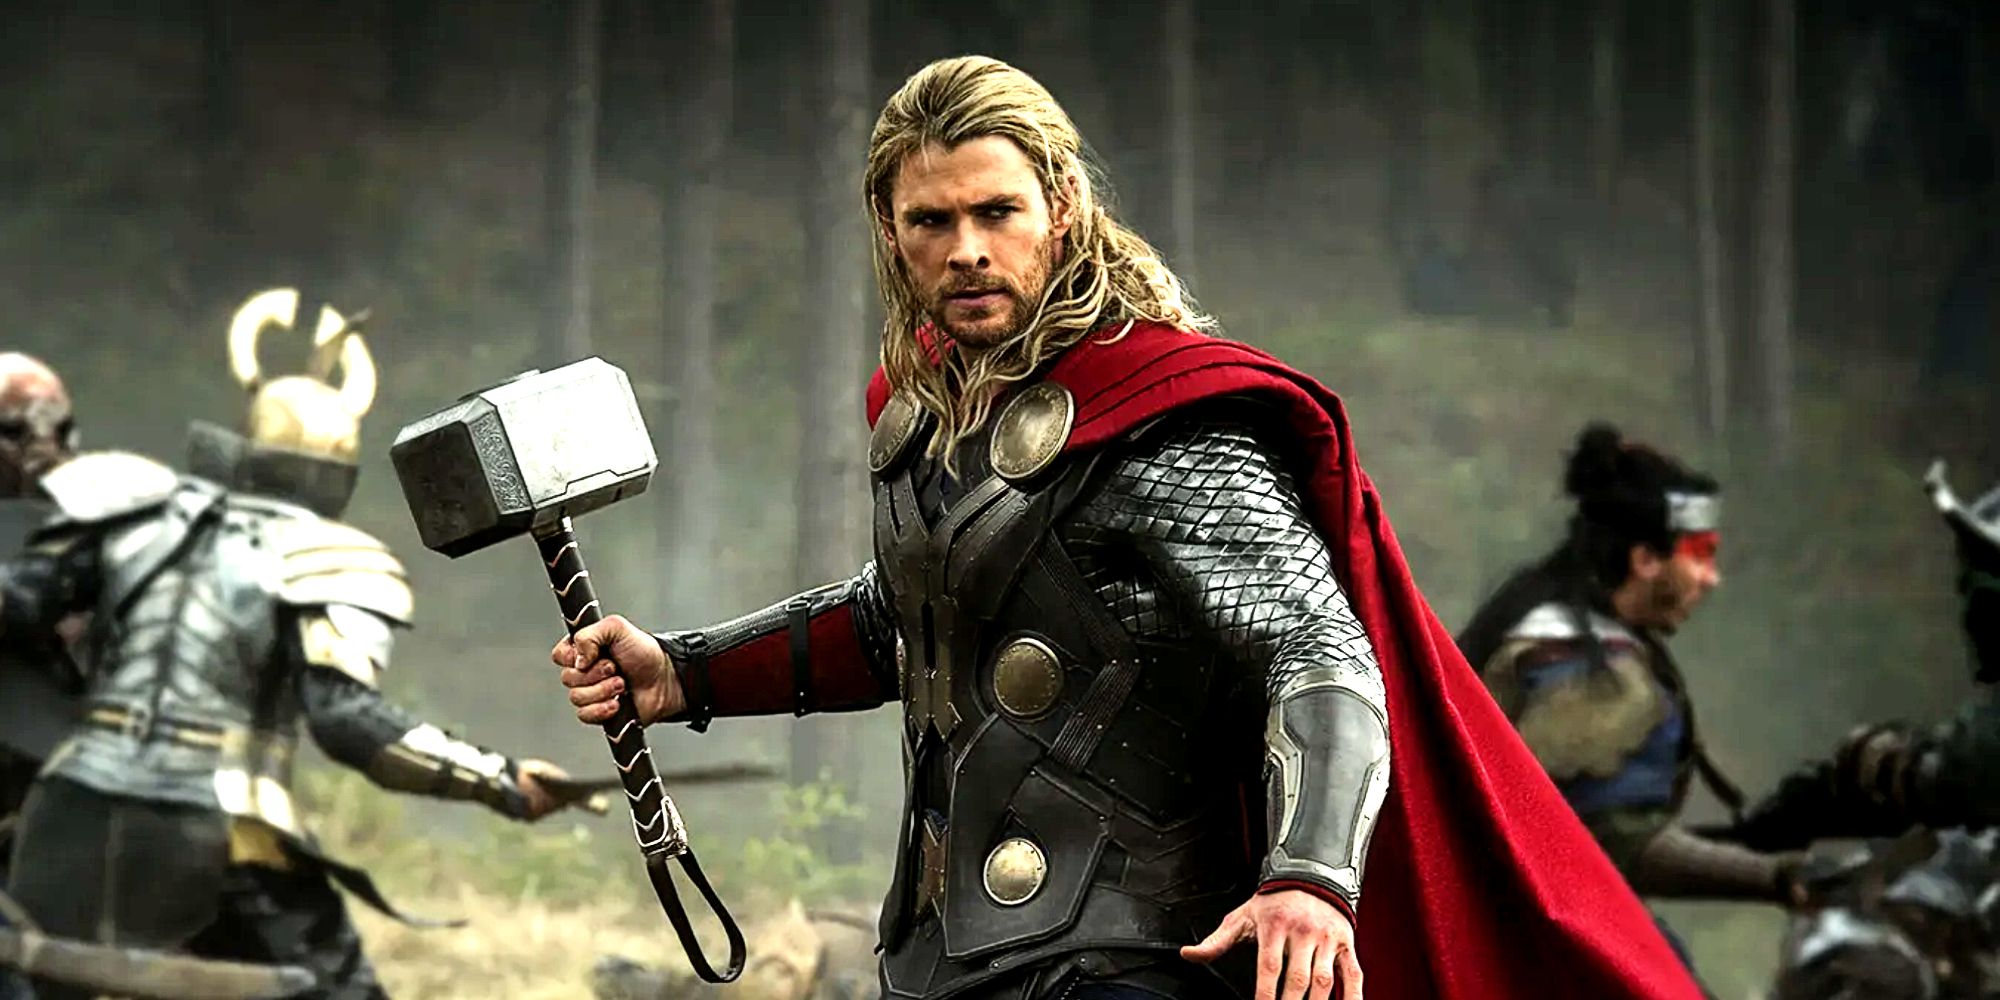 Chris Hemsworth in Thor The Dark World wielding Mjonir and wearing Asgardian armor